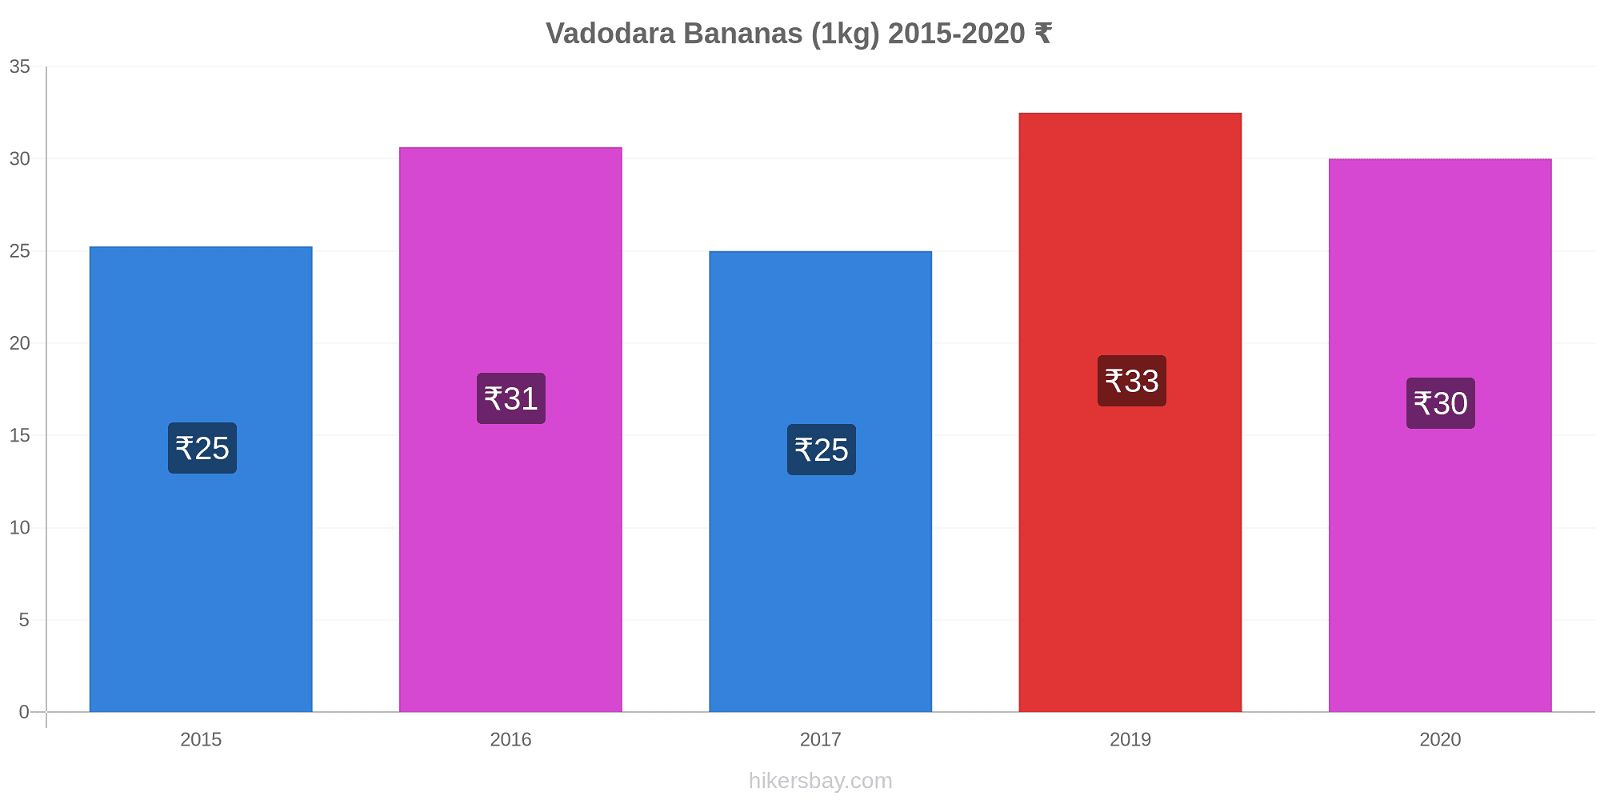 Vadodara price changes Bananas (1kg) hikersbay.com